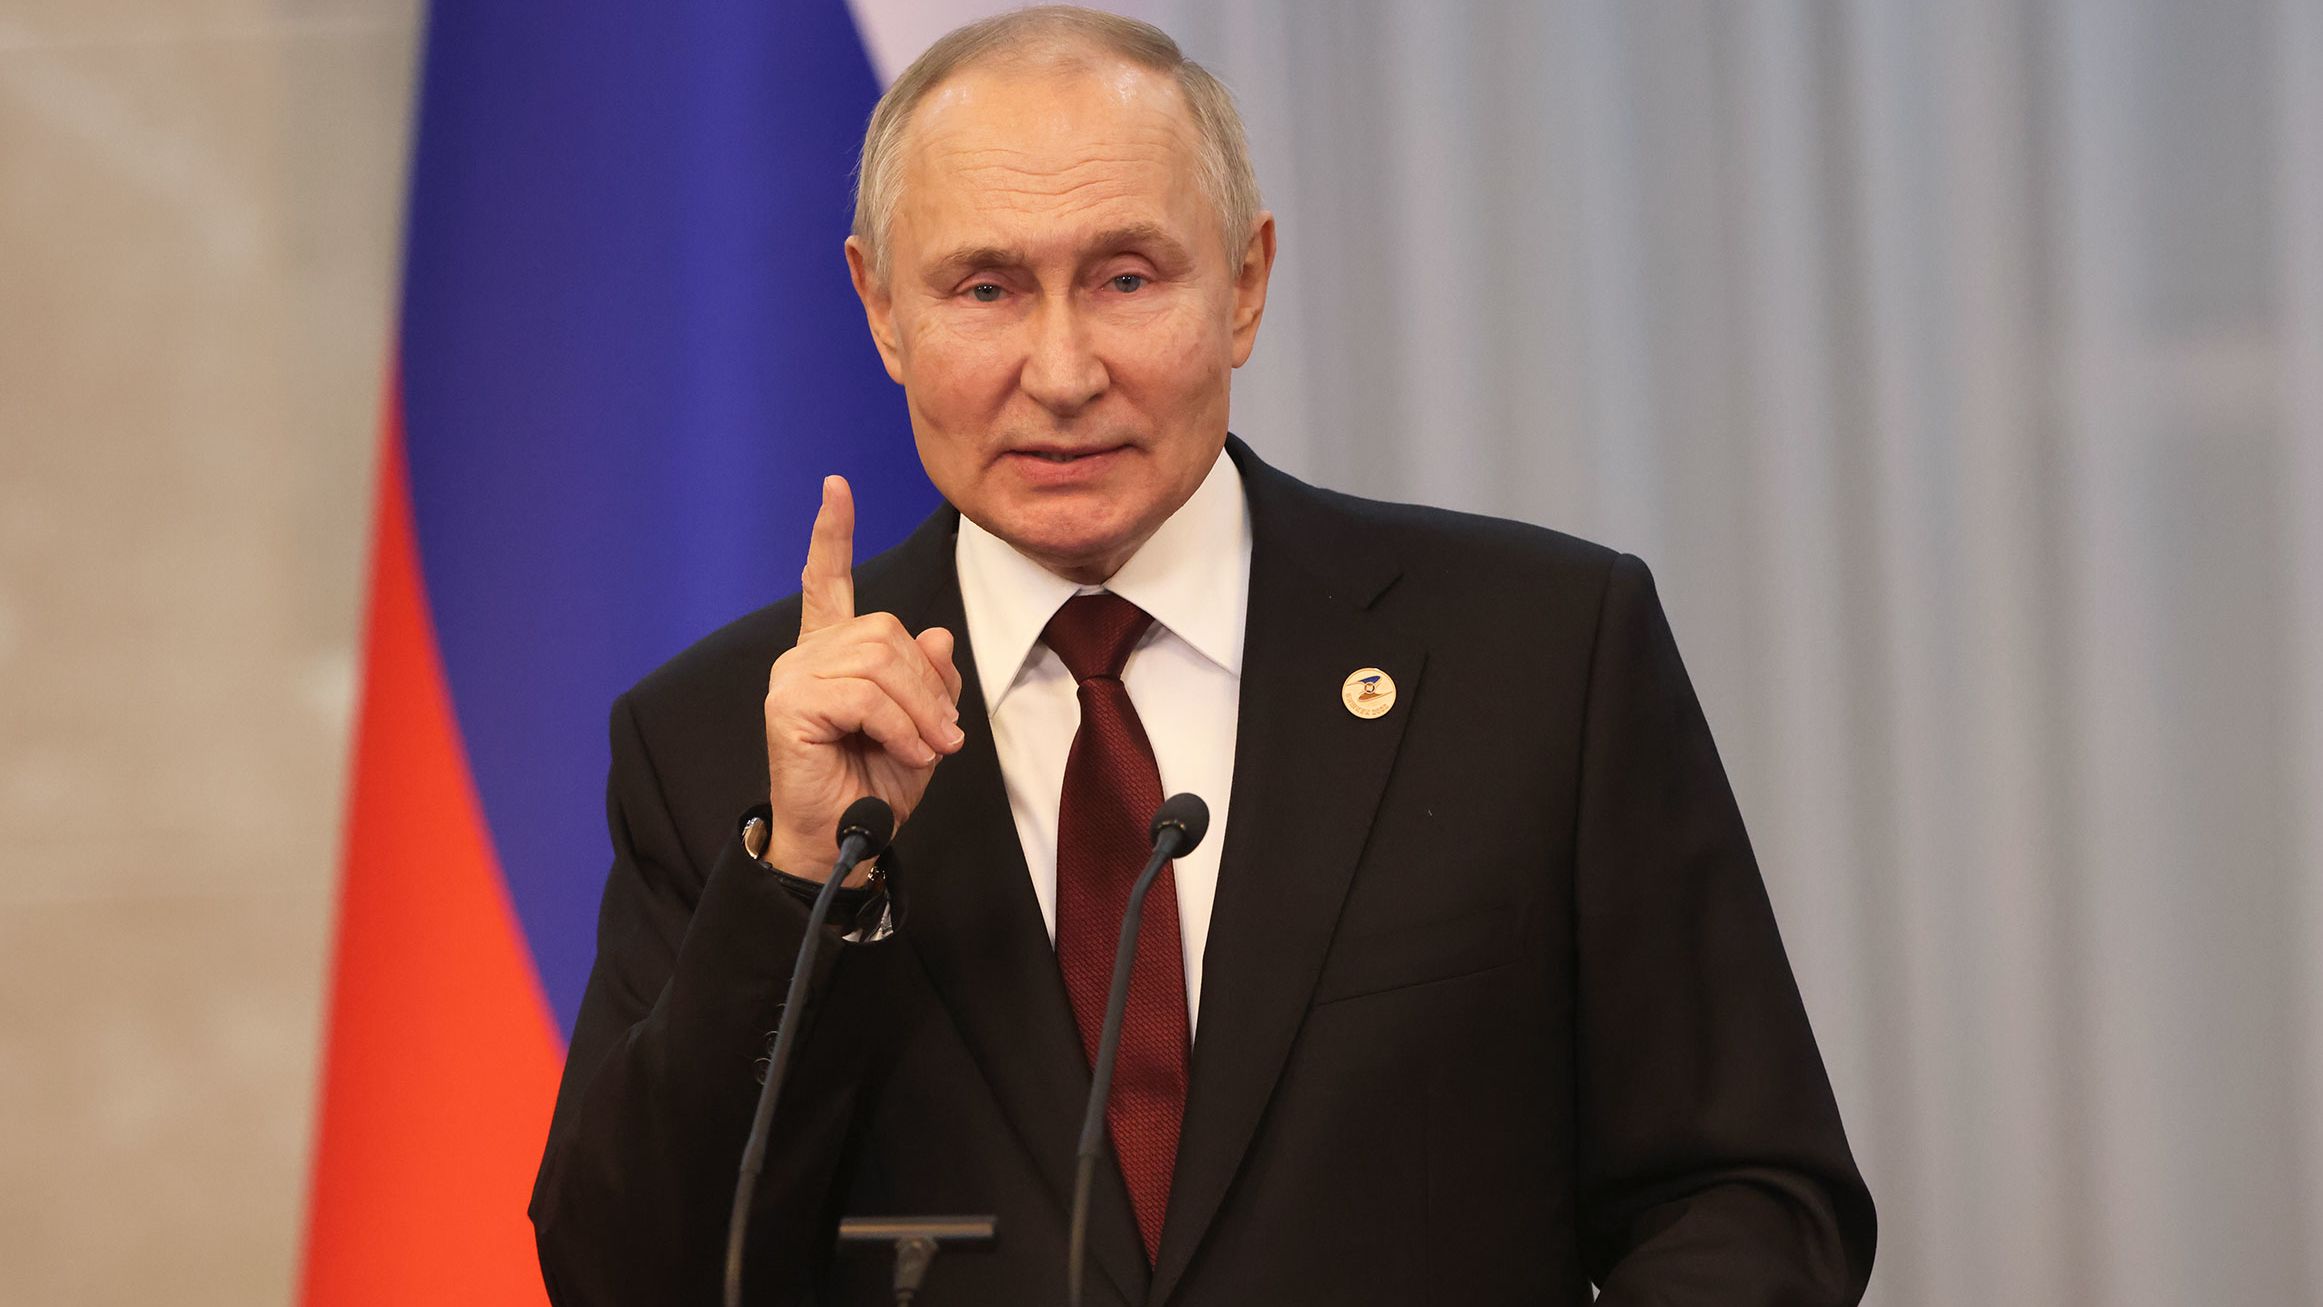 Russian President Vladimir Putin was speaking at a news conference in the Kyrgyzstan capital Bishkek.